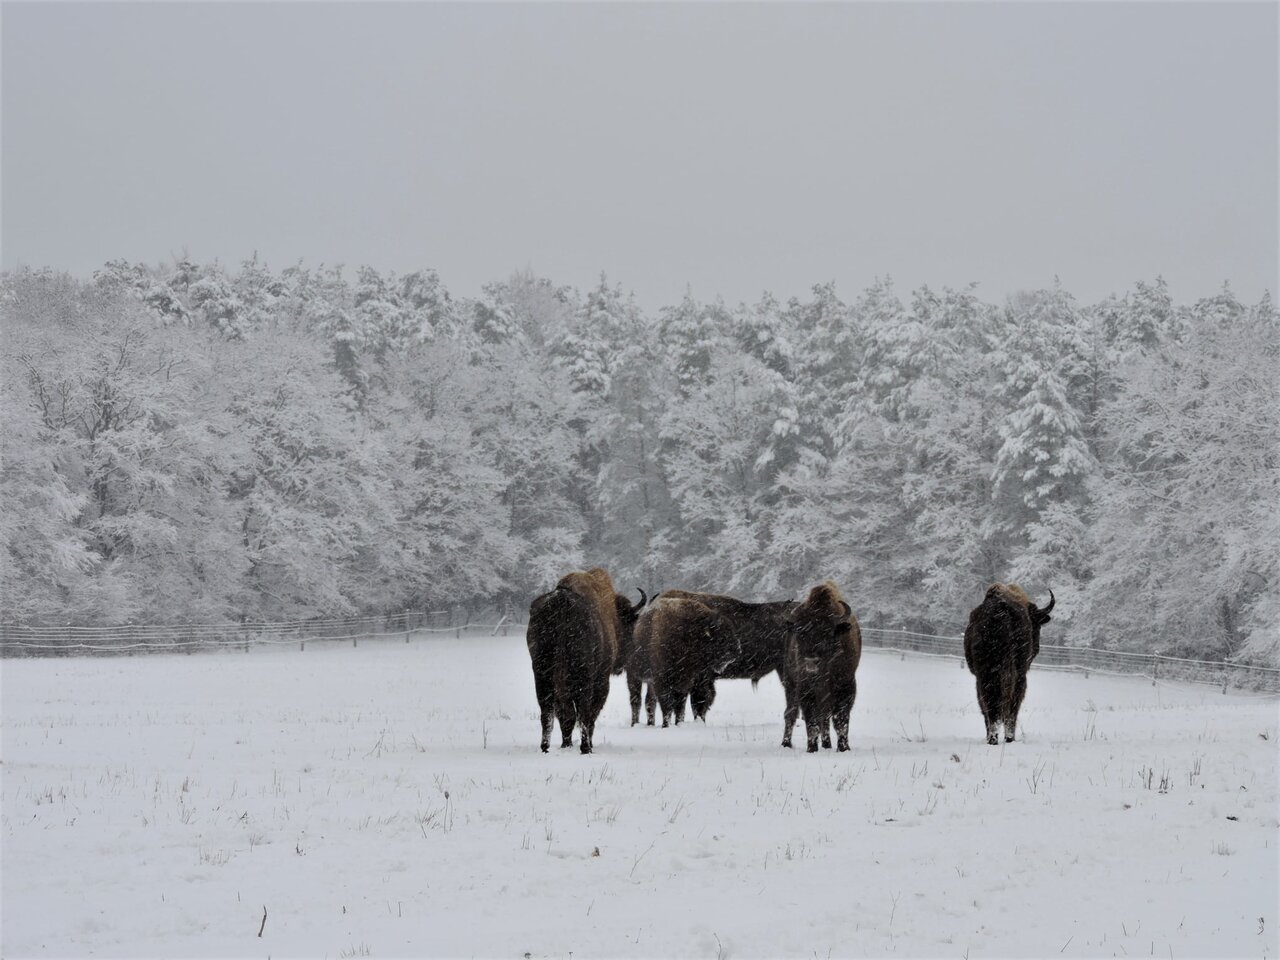 parque nacional, Örség, búfalo, invierno, destino, nieve, Hungría